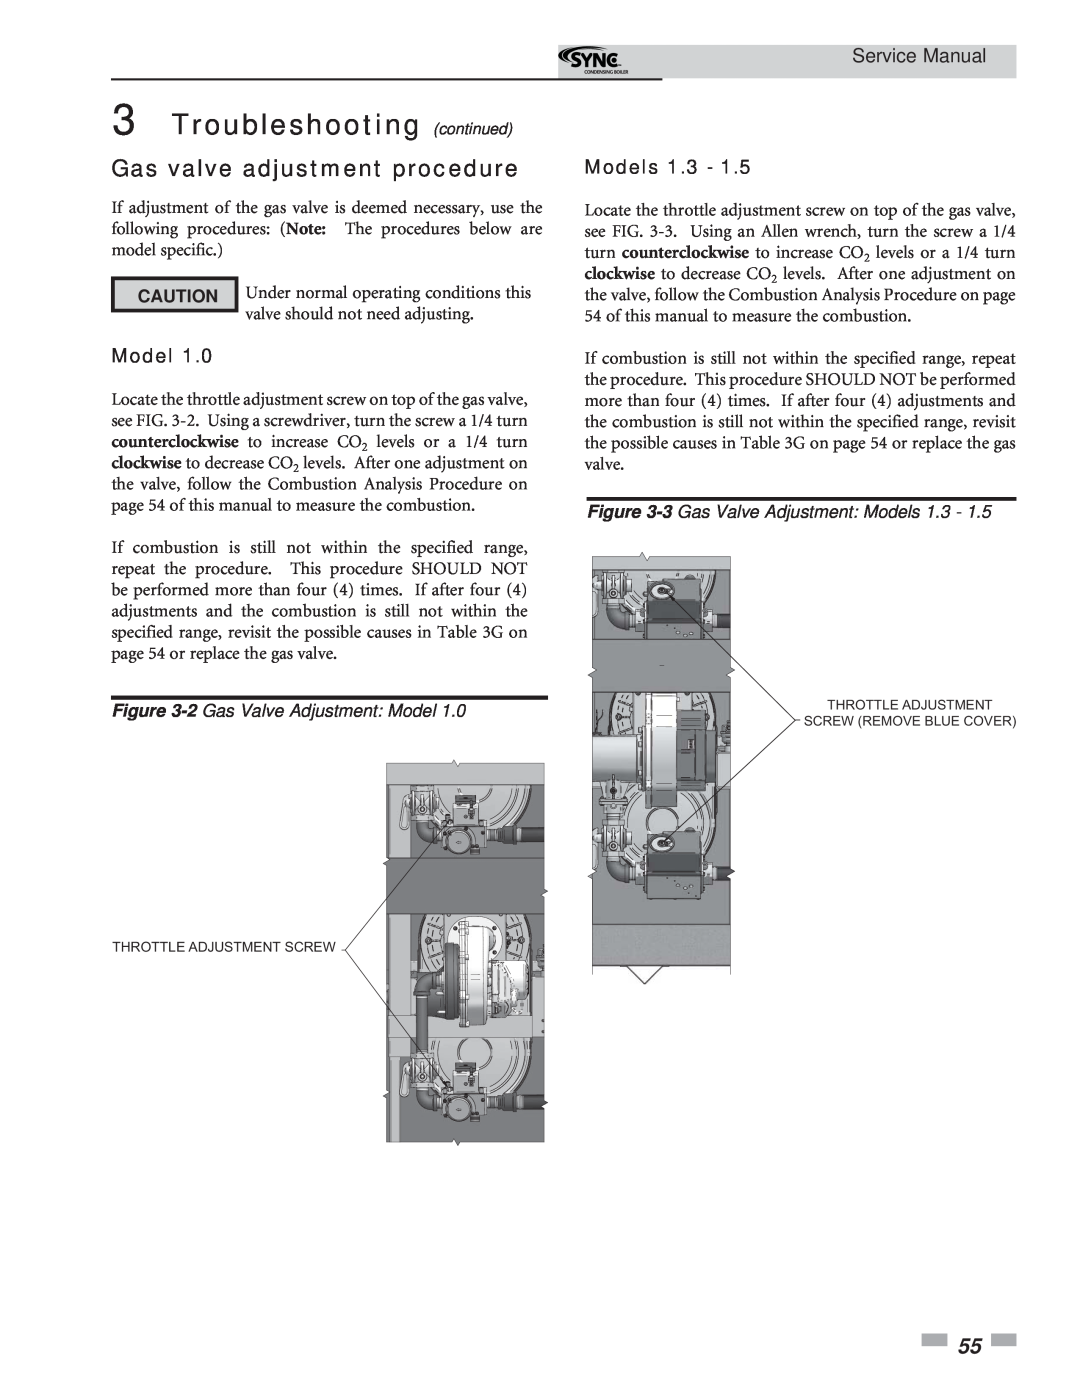 Lochinvar service manual Gas valve adjustment procedure, Troubleshooting continued, Service Manual, Models 1.3 